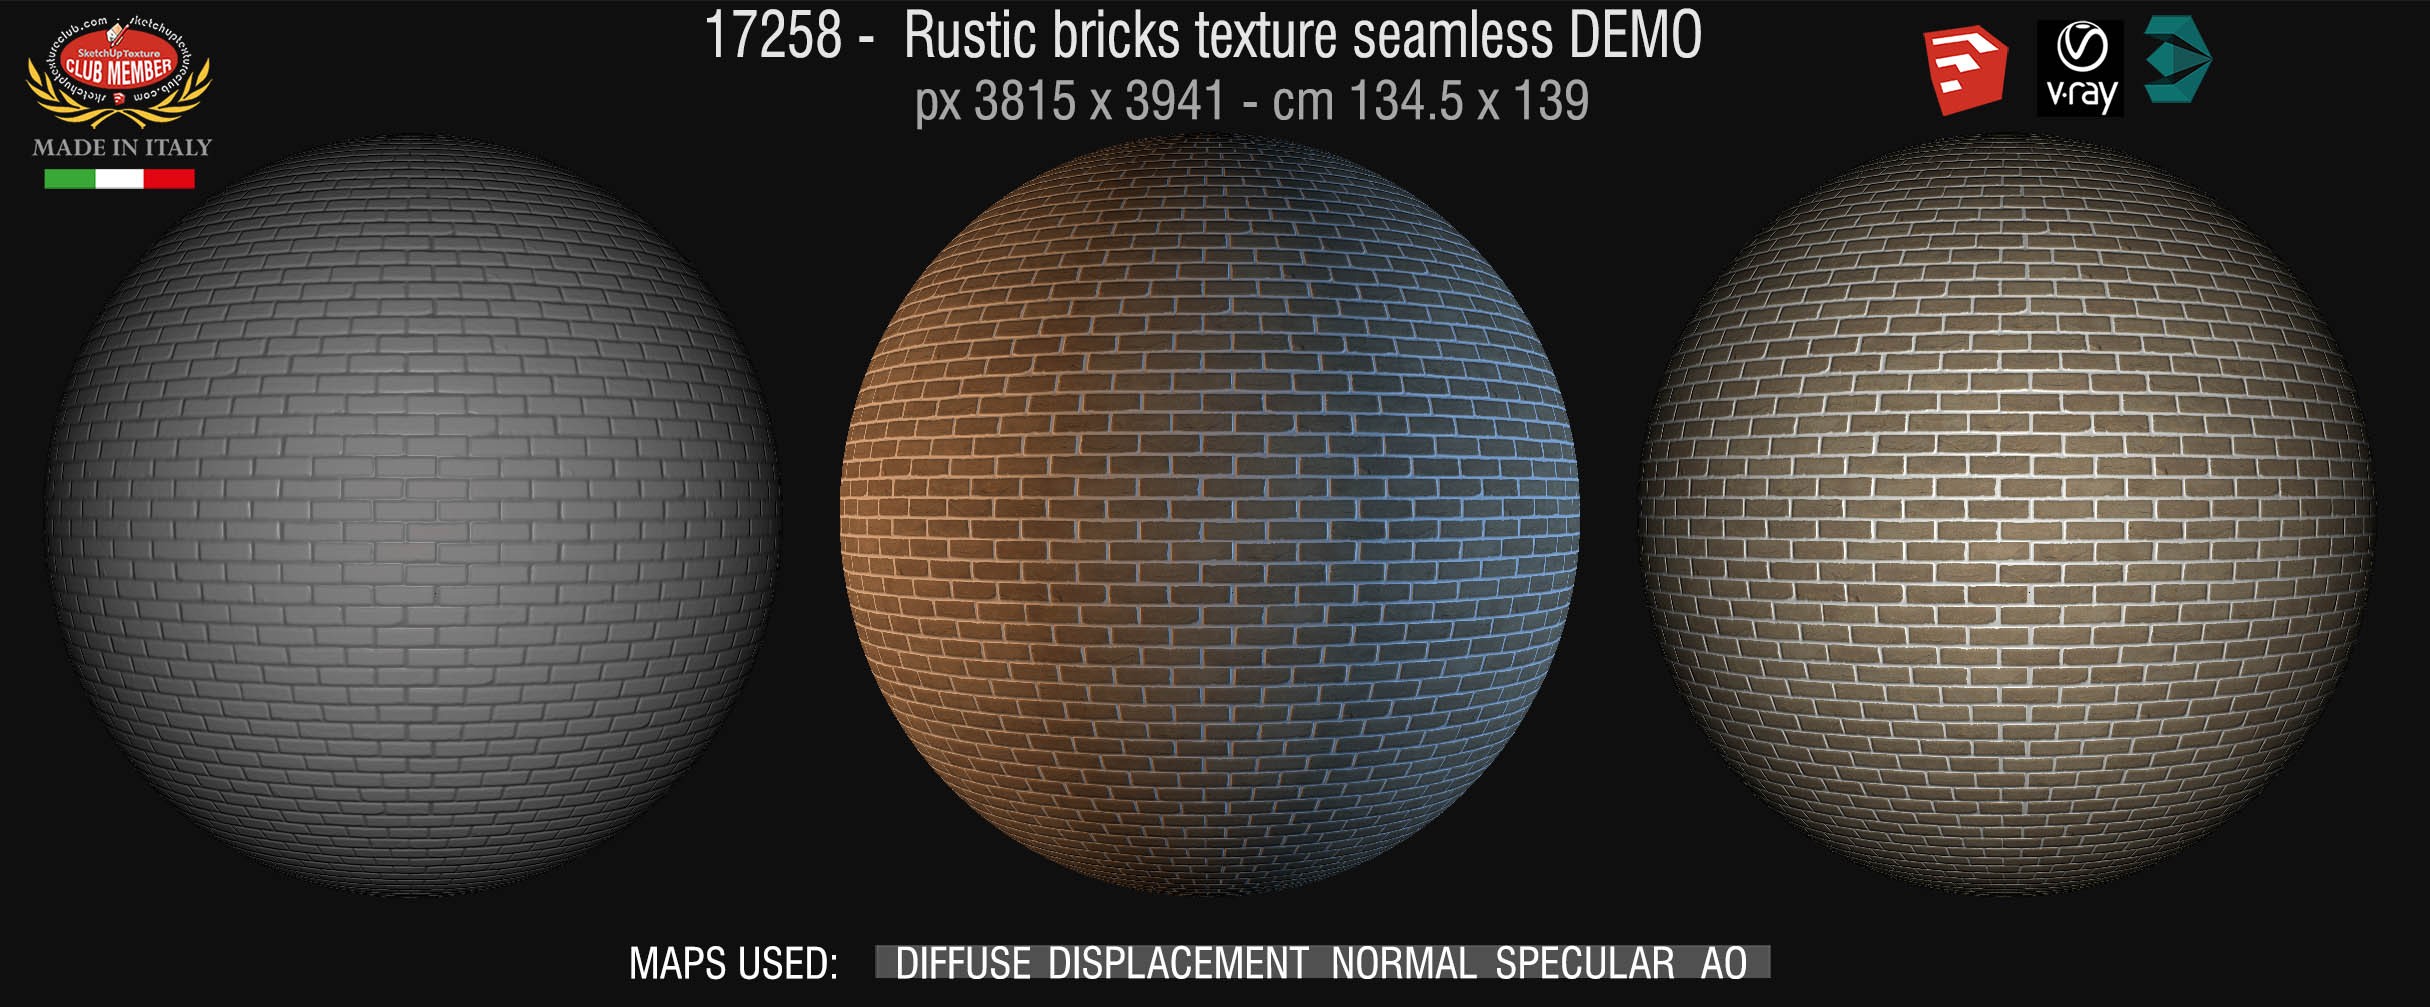 17258 Rustic bricks texture seamless + maps DEMO